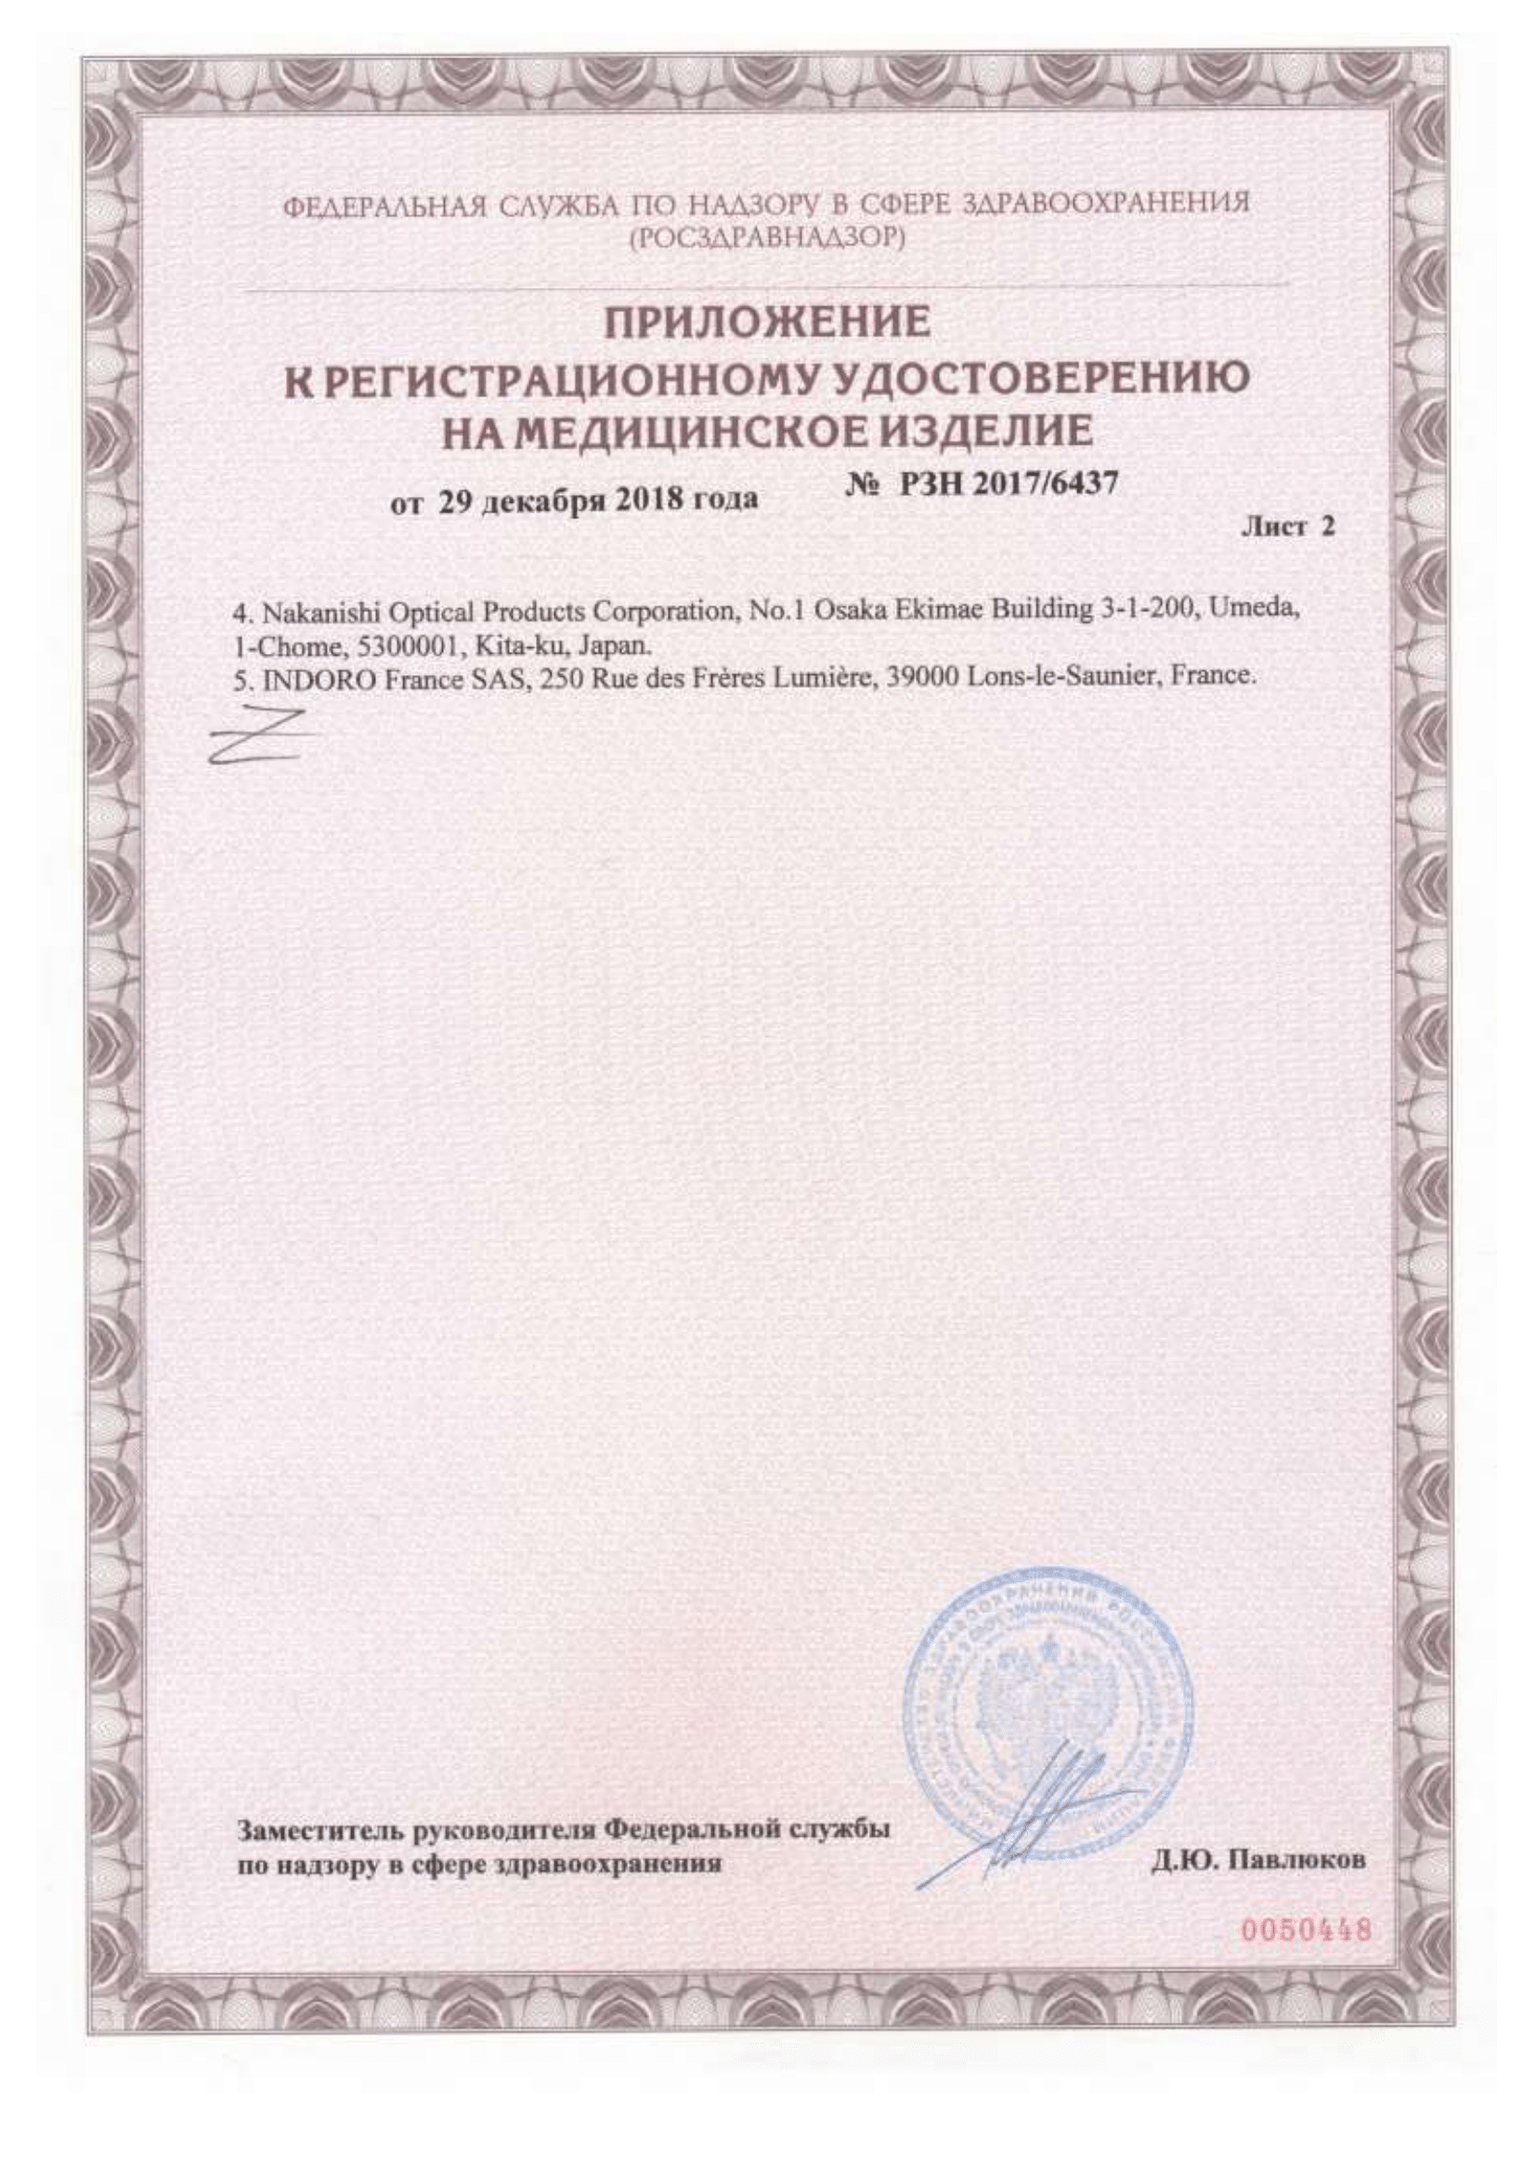 /images/certificates/sertificate4-14.png